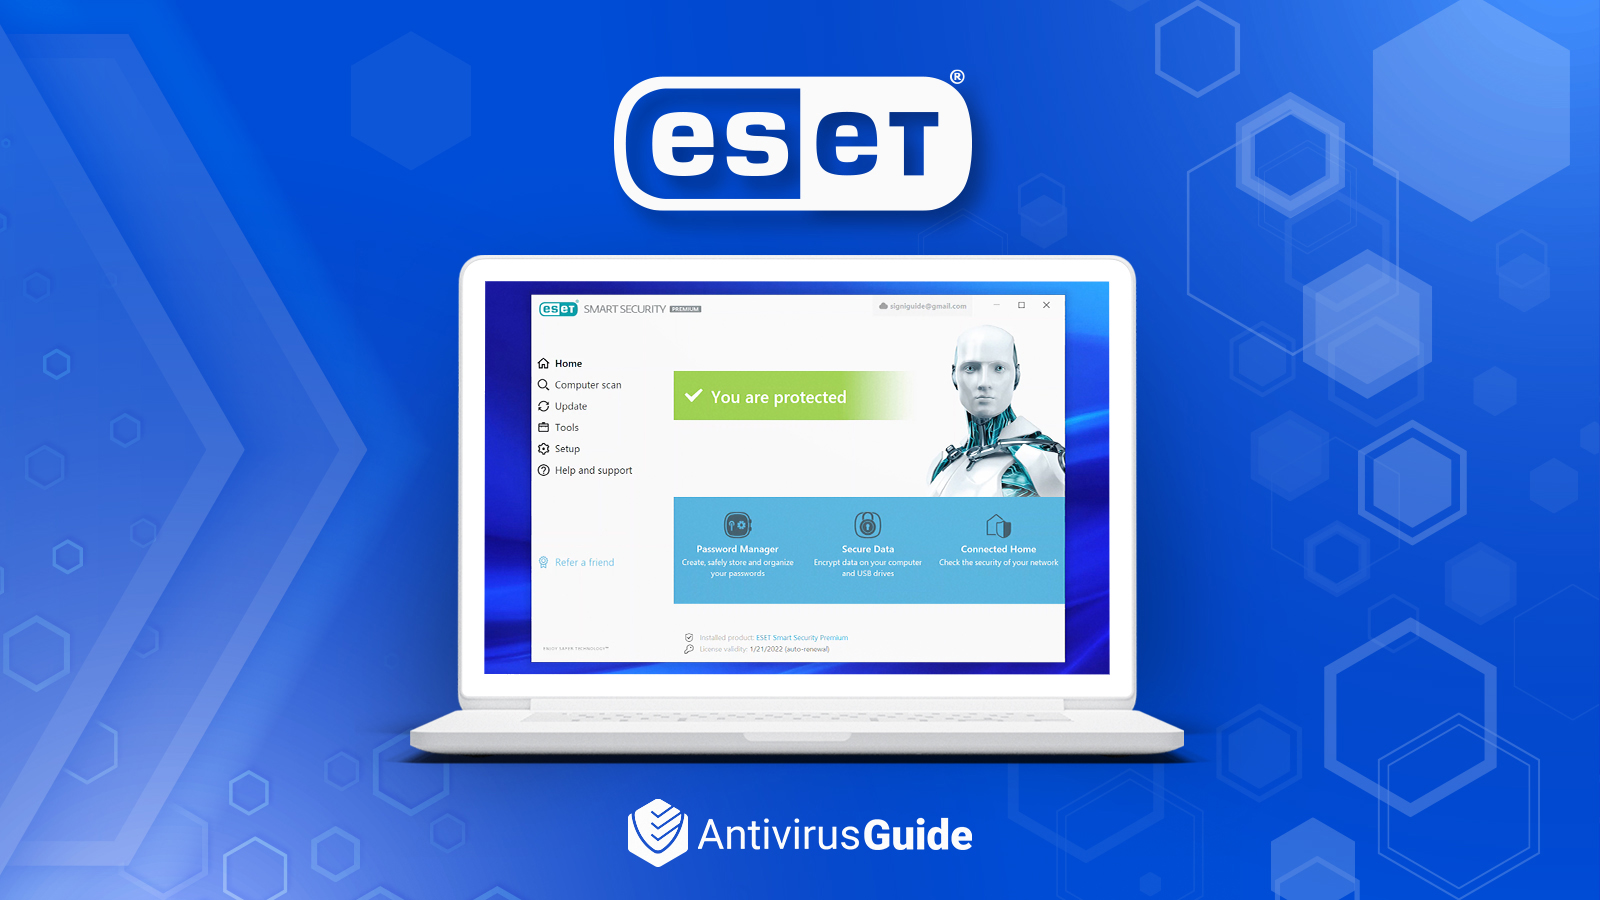 Recensie over ESET Antivirus: hoe betrouwbaar is het? [2022]